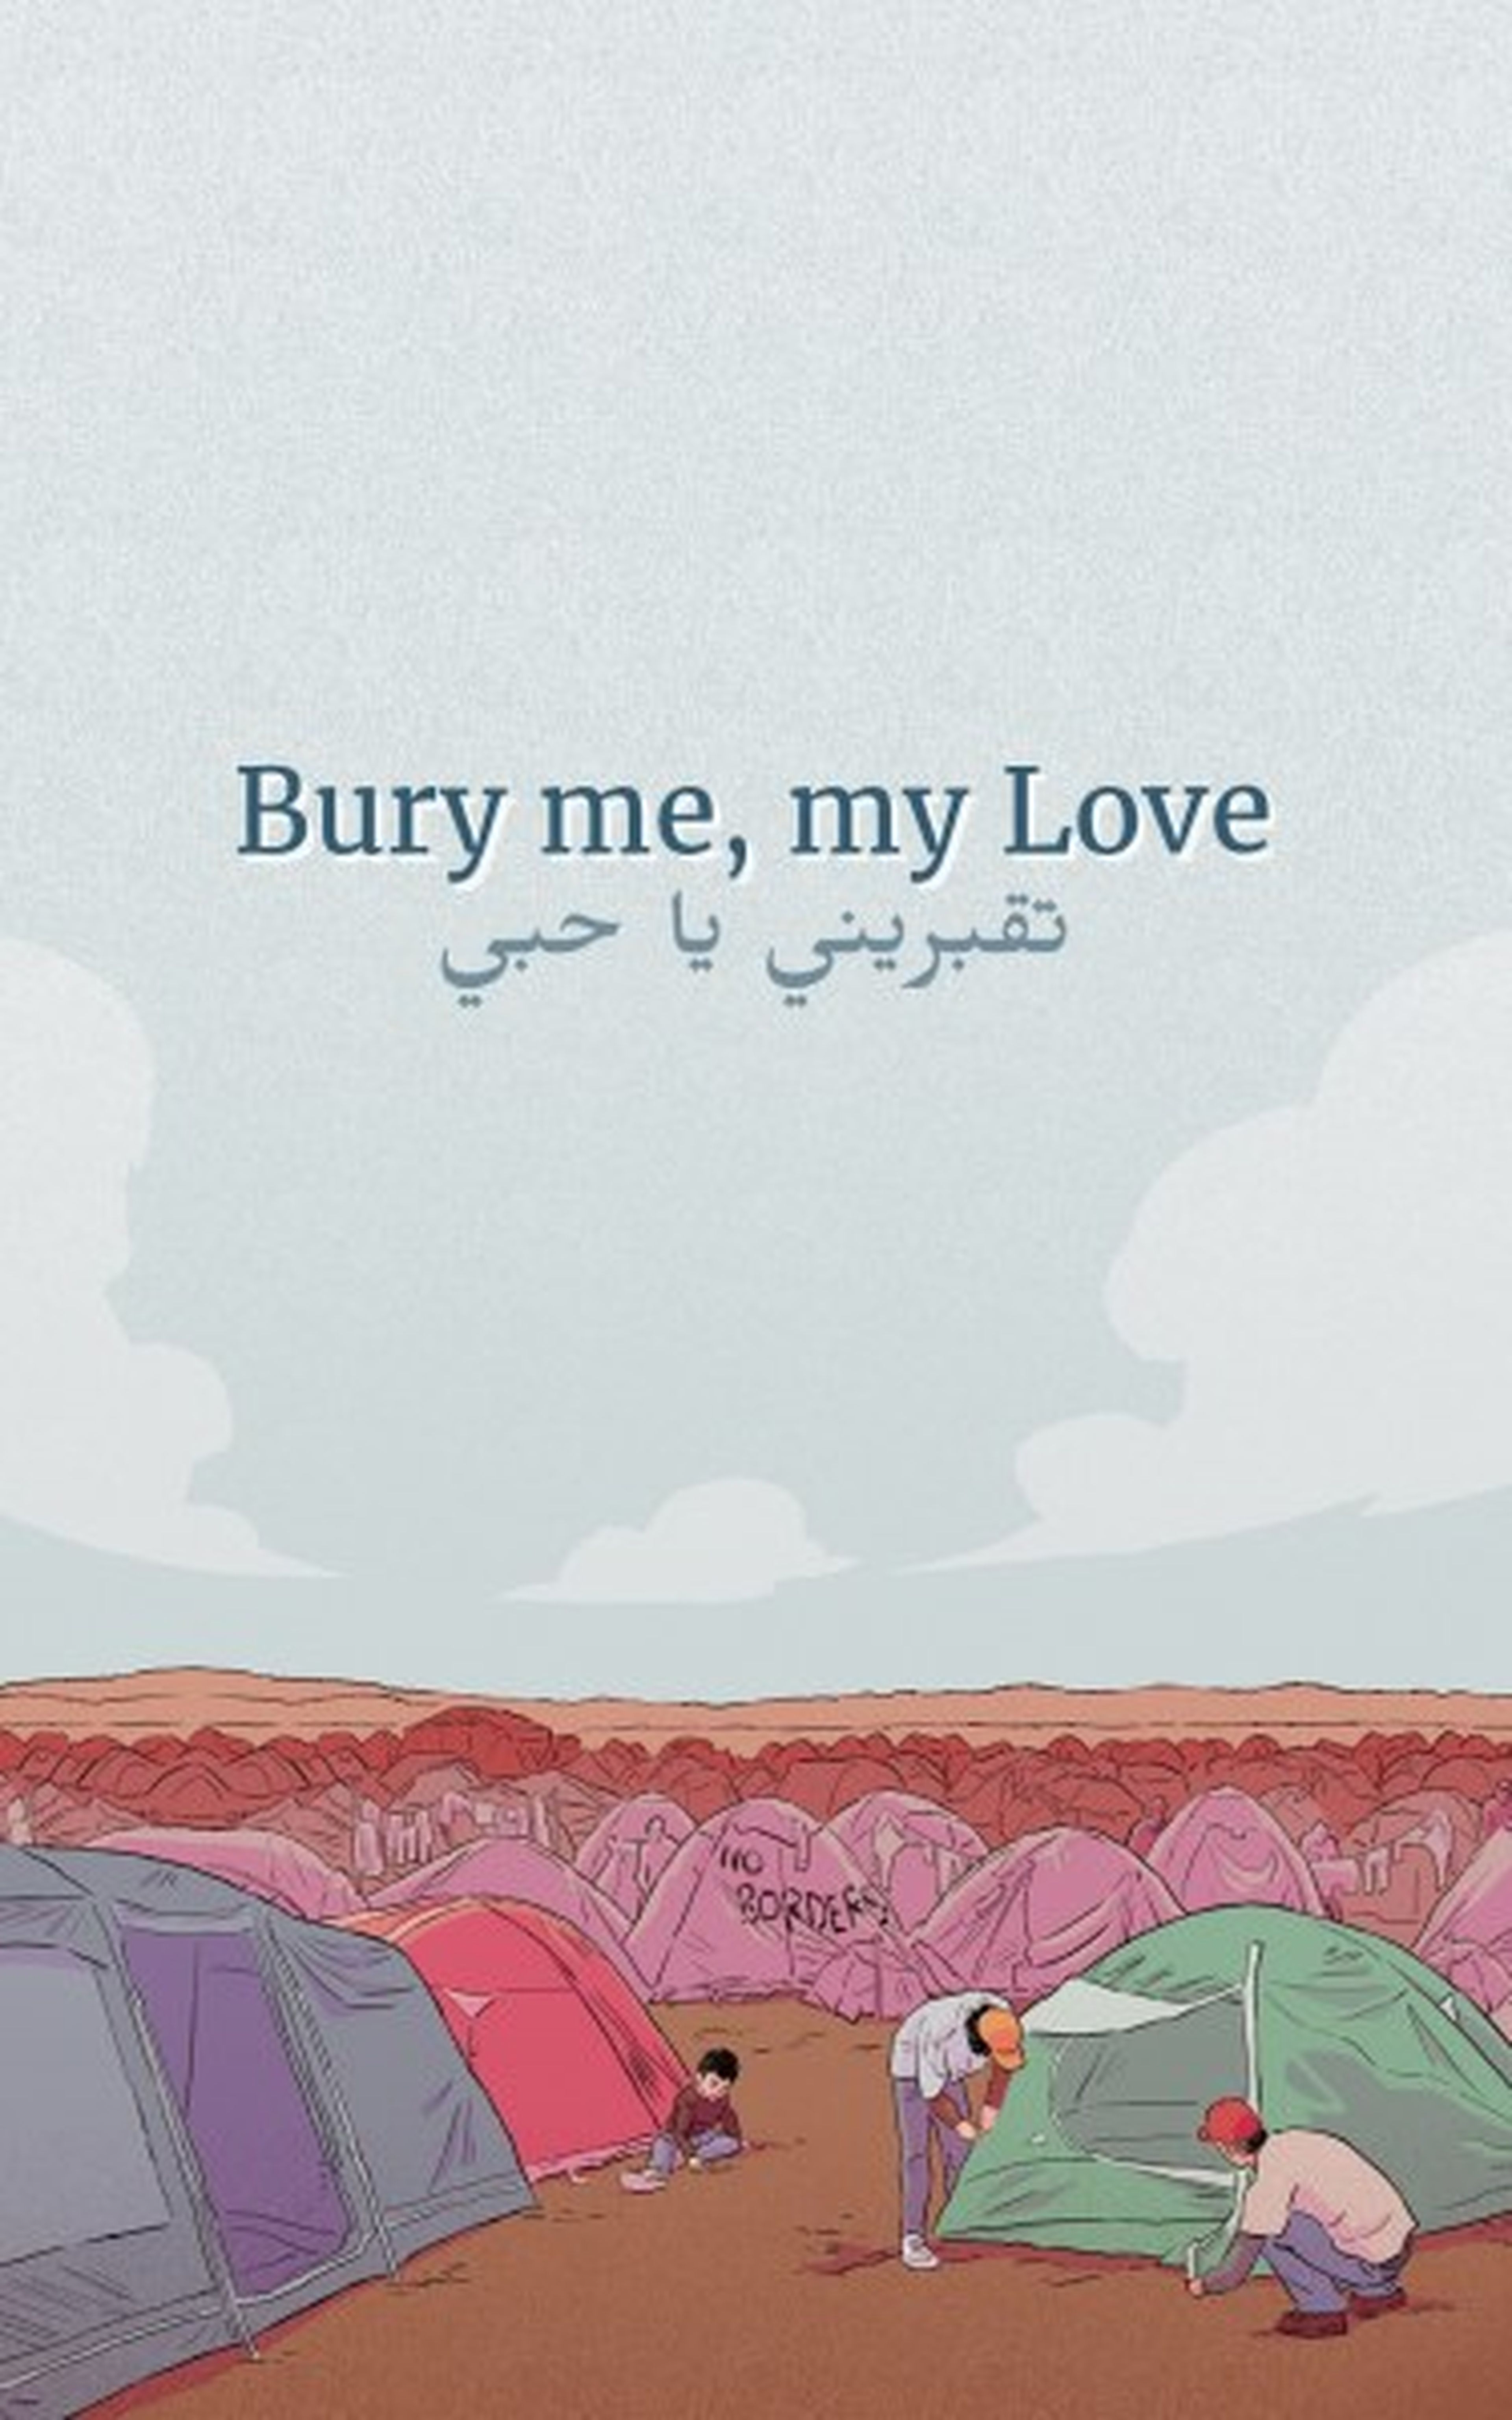 Bury me, my love cover